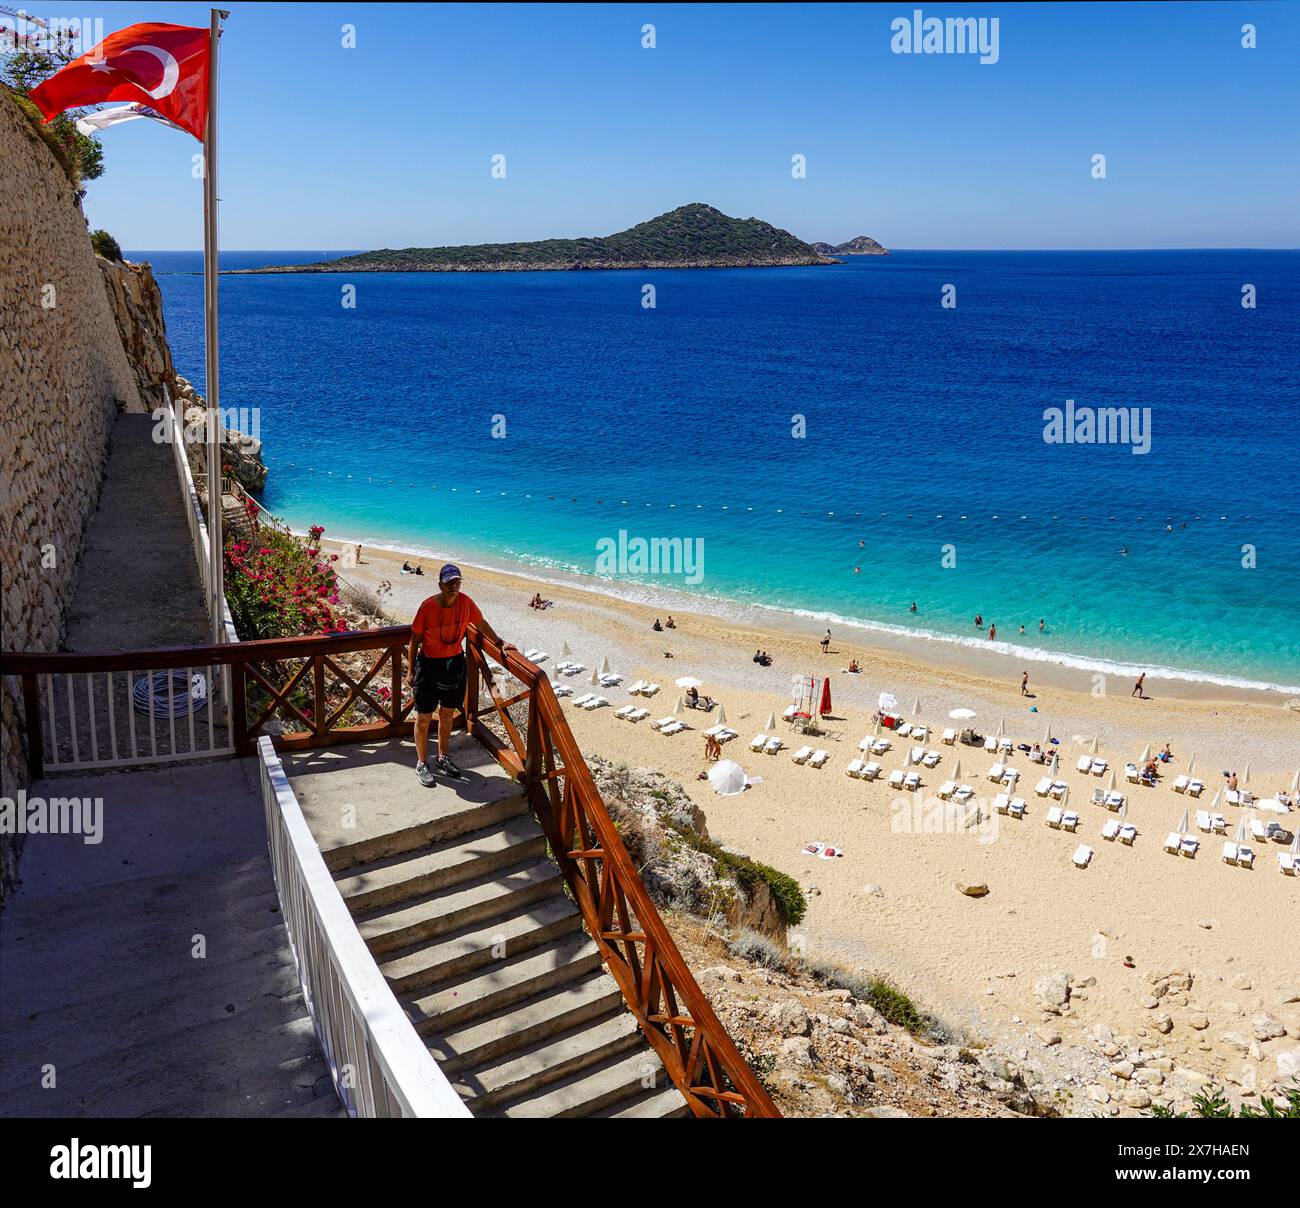 The amazing and popular Kaputas Beach, near Kalkan, Turkey Stock Photo